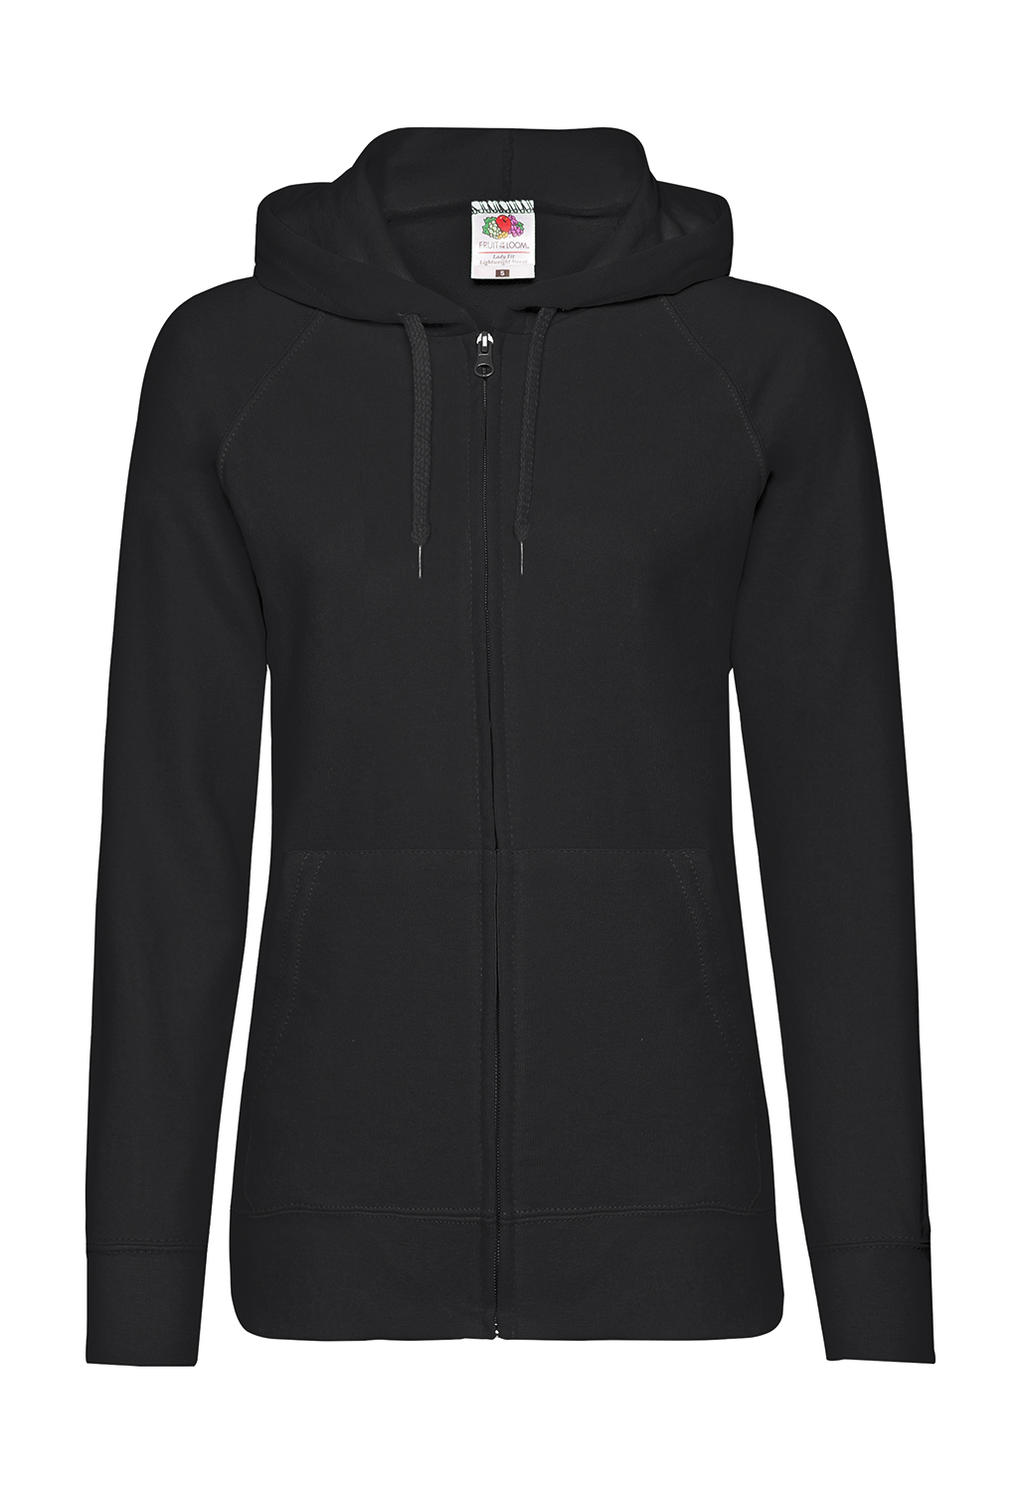  Ladies Lightweight Hooded Sweat Jacket in Farbe Black